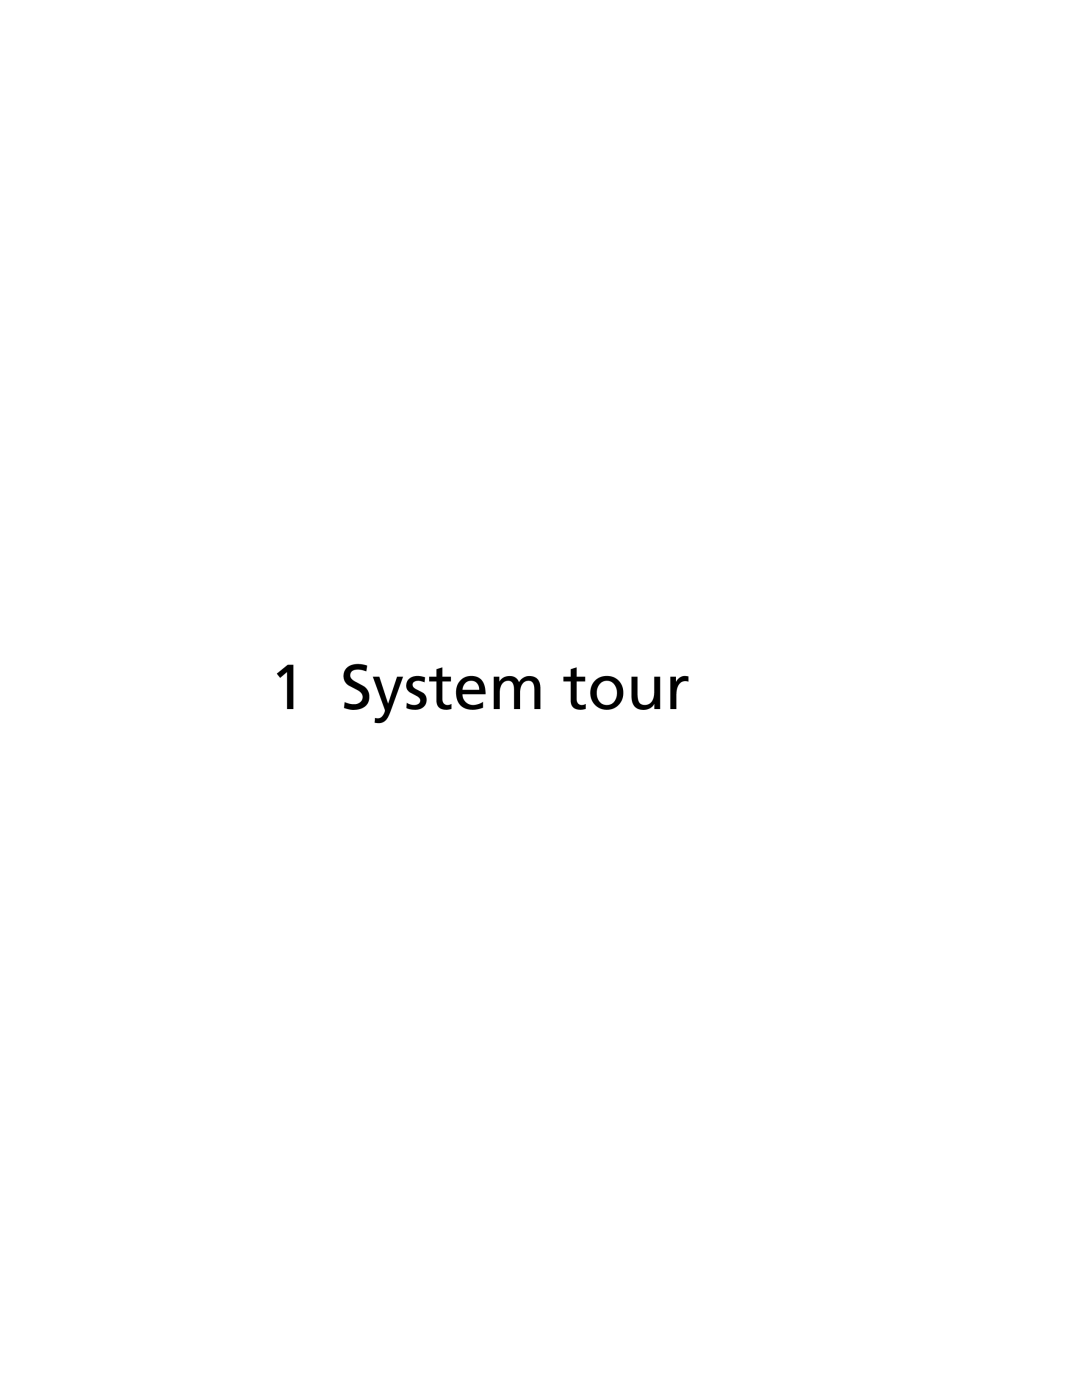 Acer G520 series manual System tour 